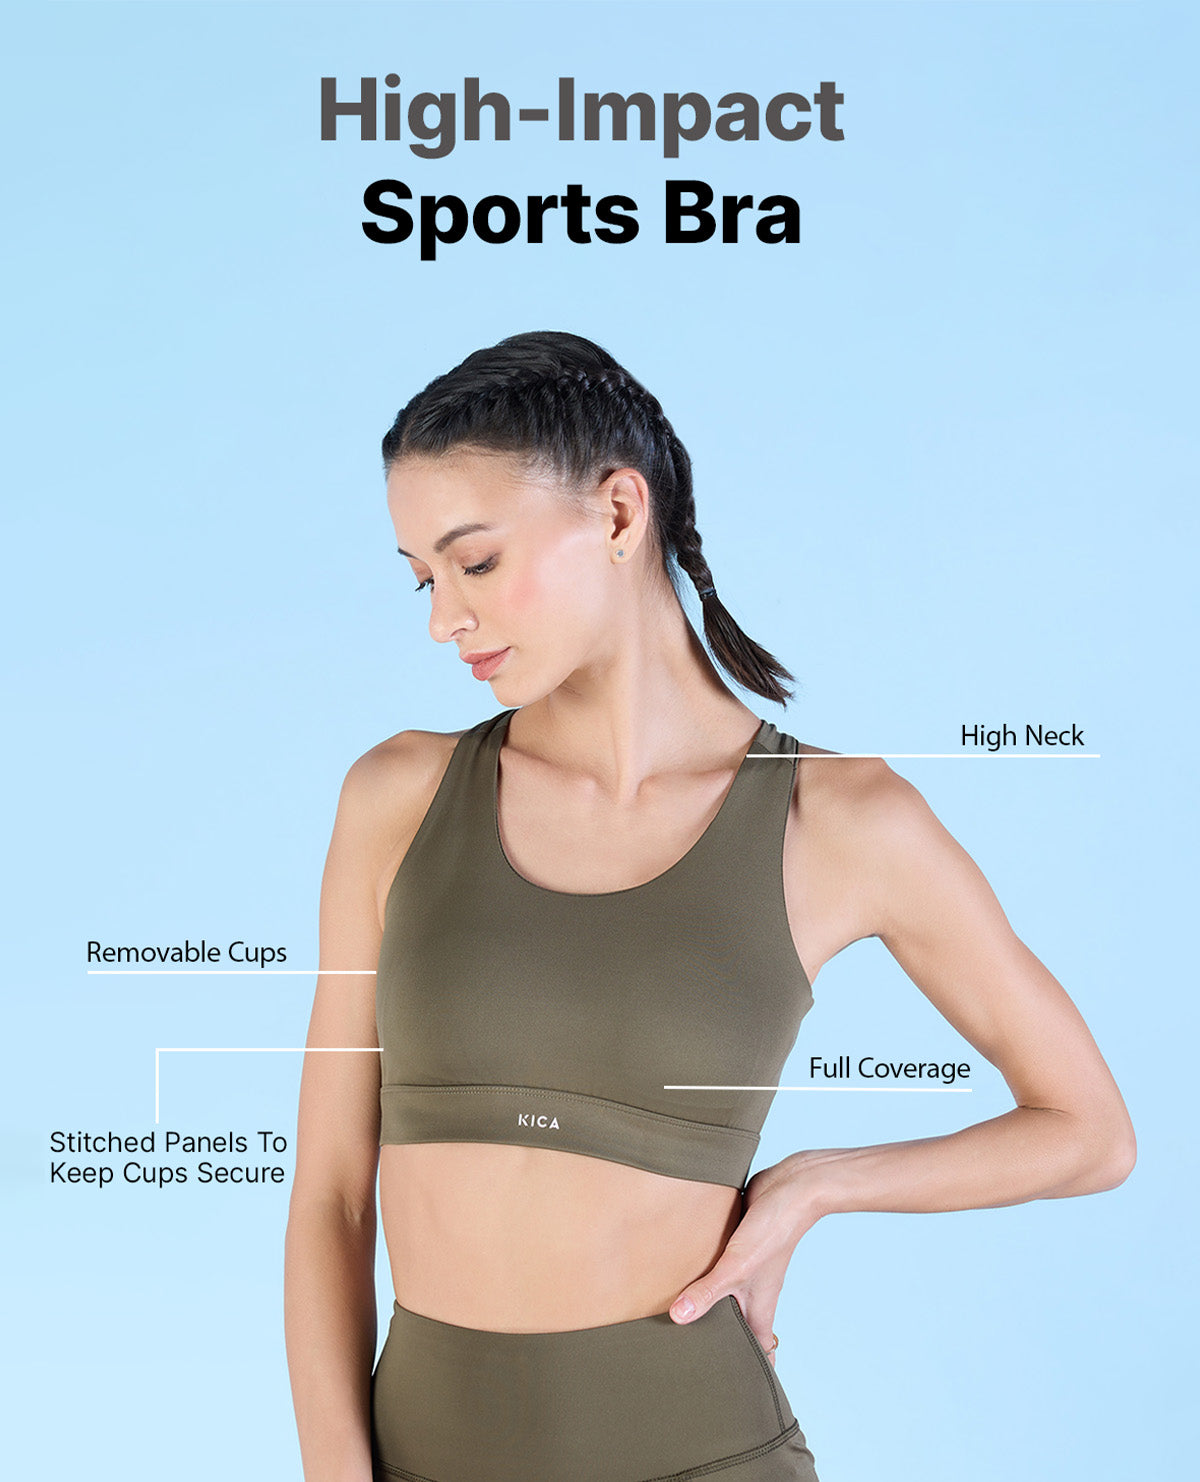  KEHUAN Women Shaper Front Closure Bra Compression Crop Top  Chest Brace Vest+Corset Belt with Breast Support Band,Beige-1X